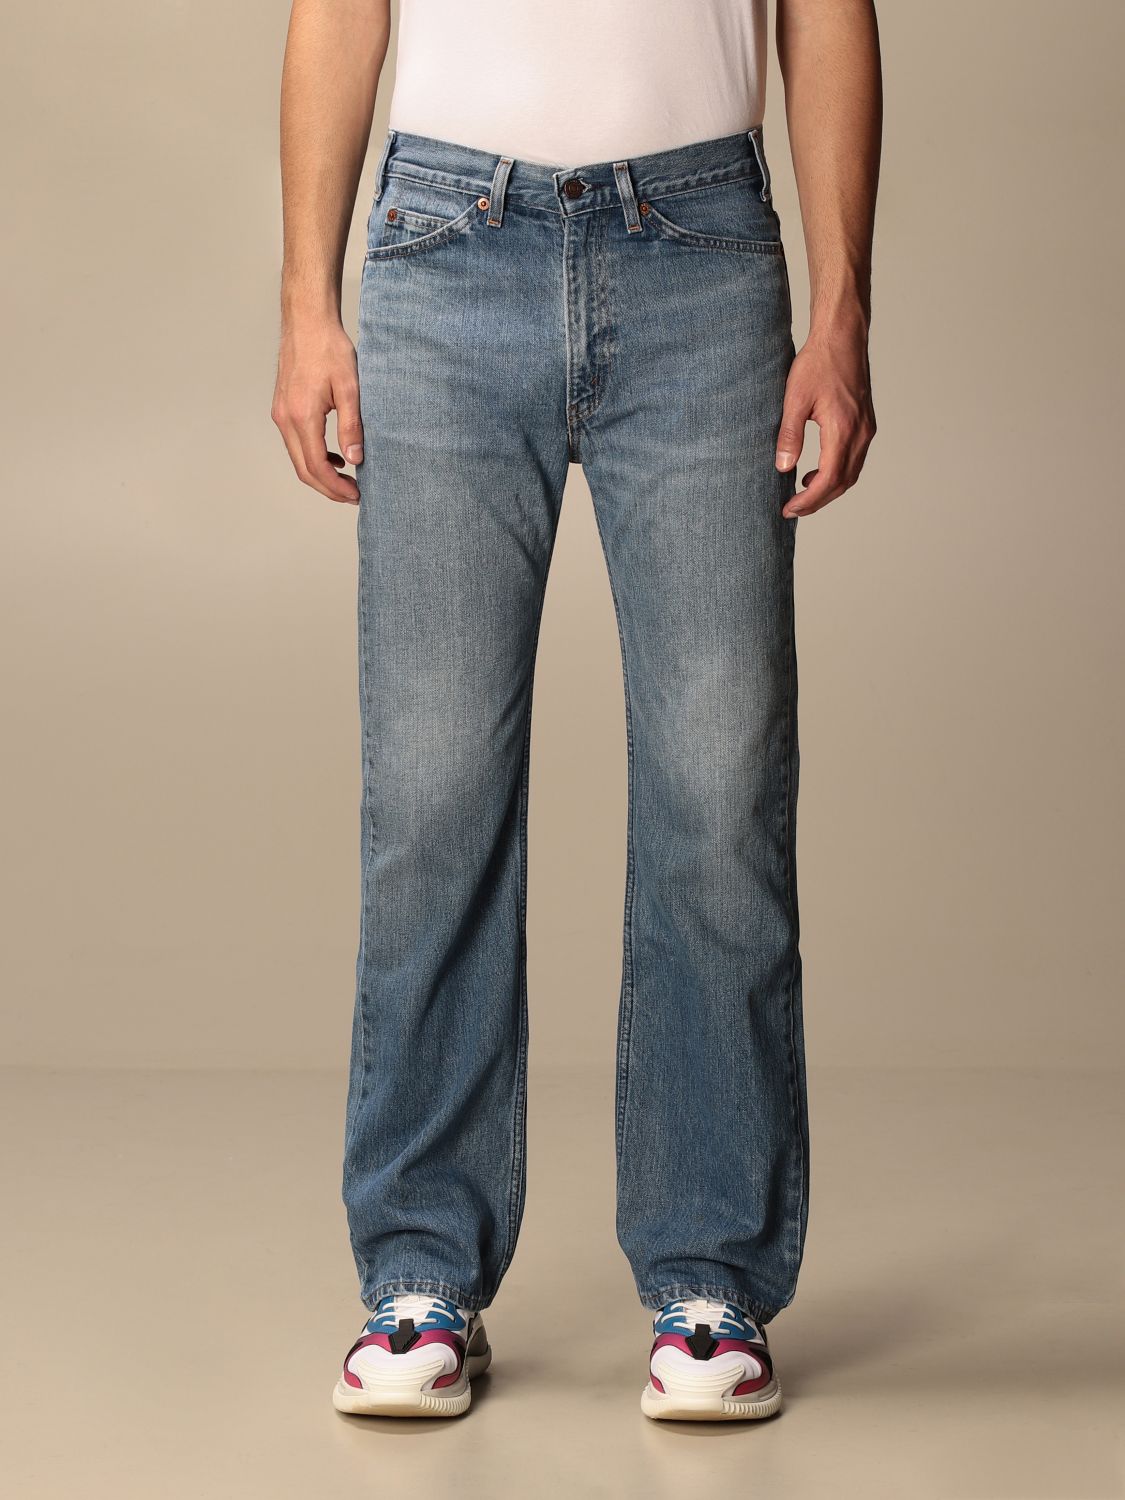 VALENTINO: Levi's x 1969 re-edition jeans - Denim | Valentino jeans  VV0DD01G 7FJ online on 